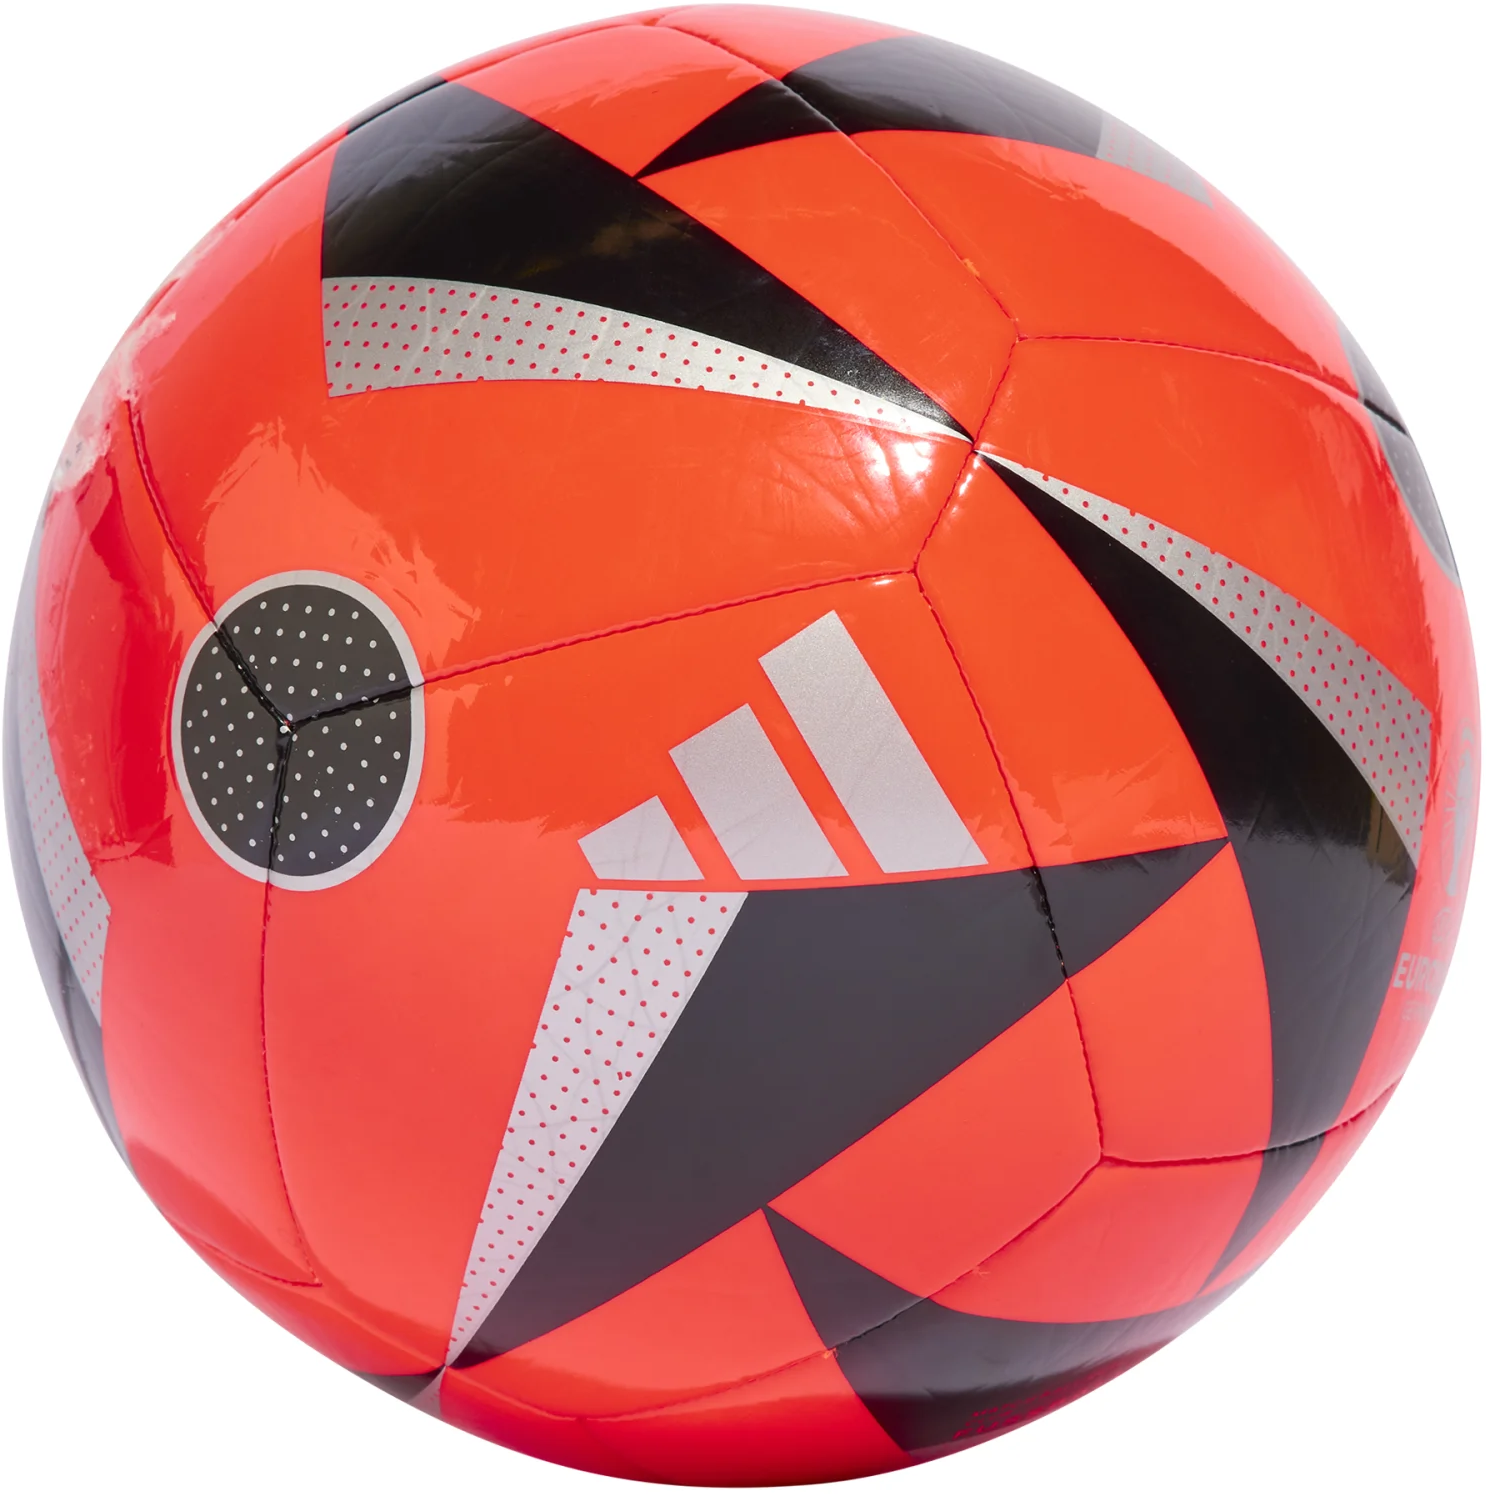 Tréninkový míč adidas EURO 24 Club